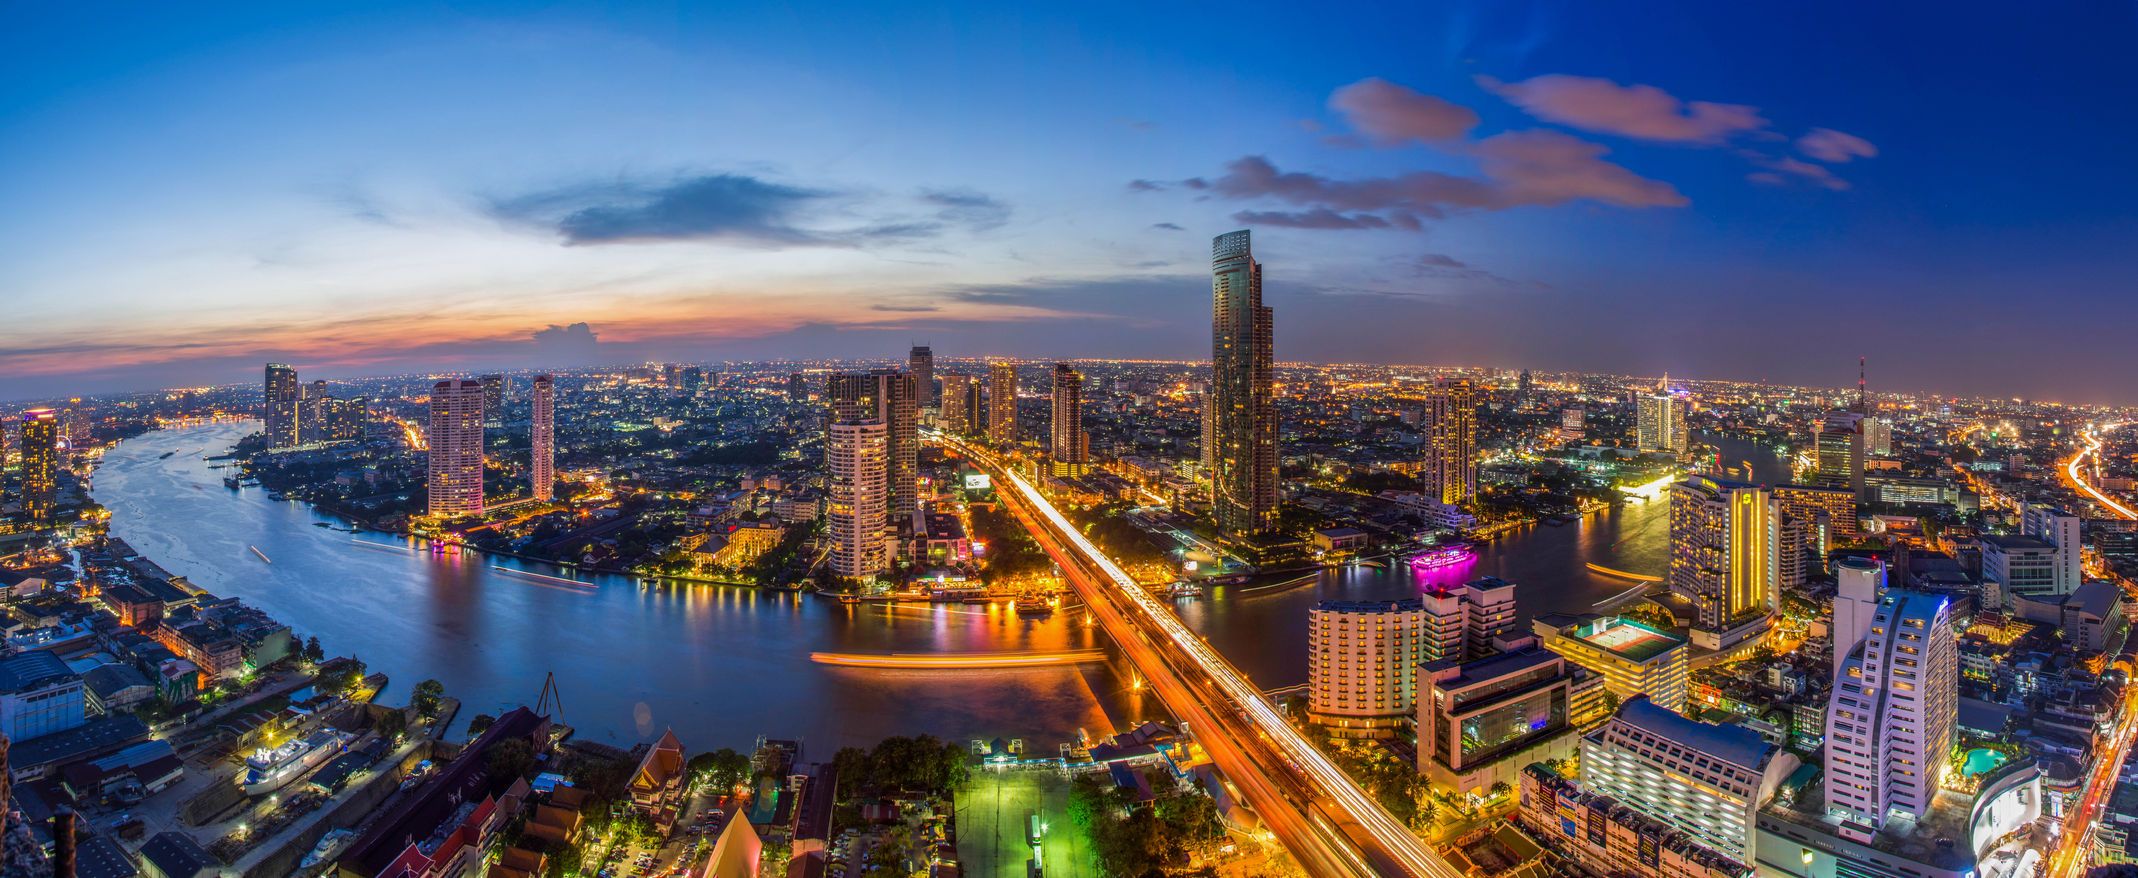 The First Case Against Trademark Infringement Under Thailand’s Computer Crime Act.